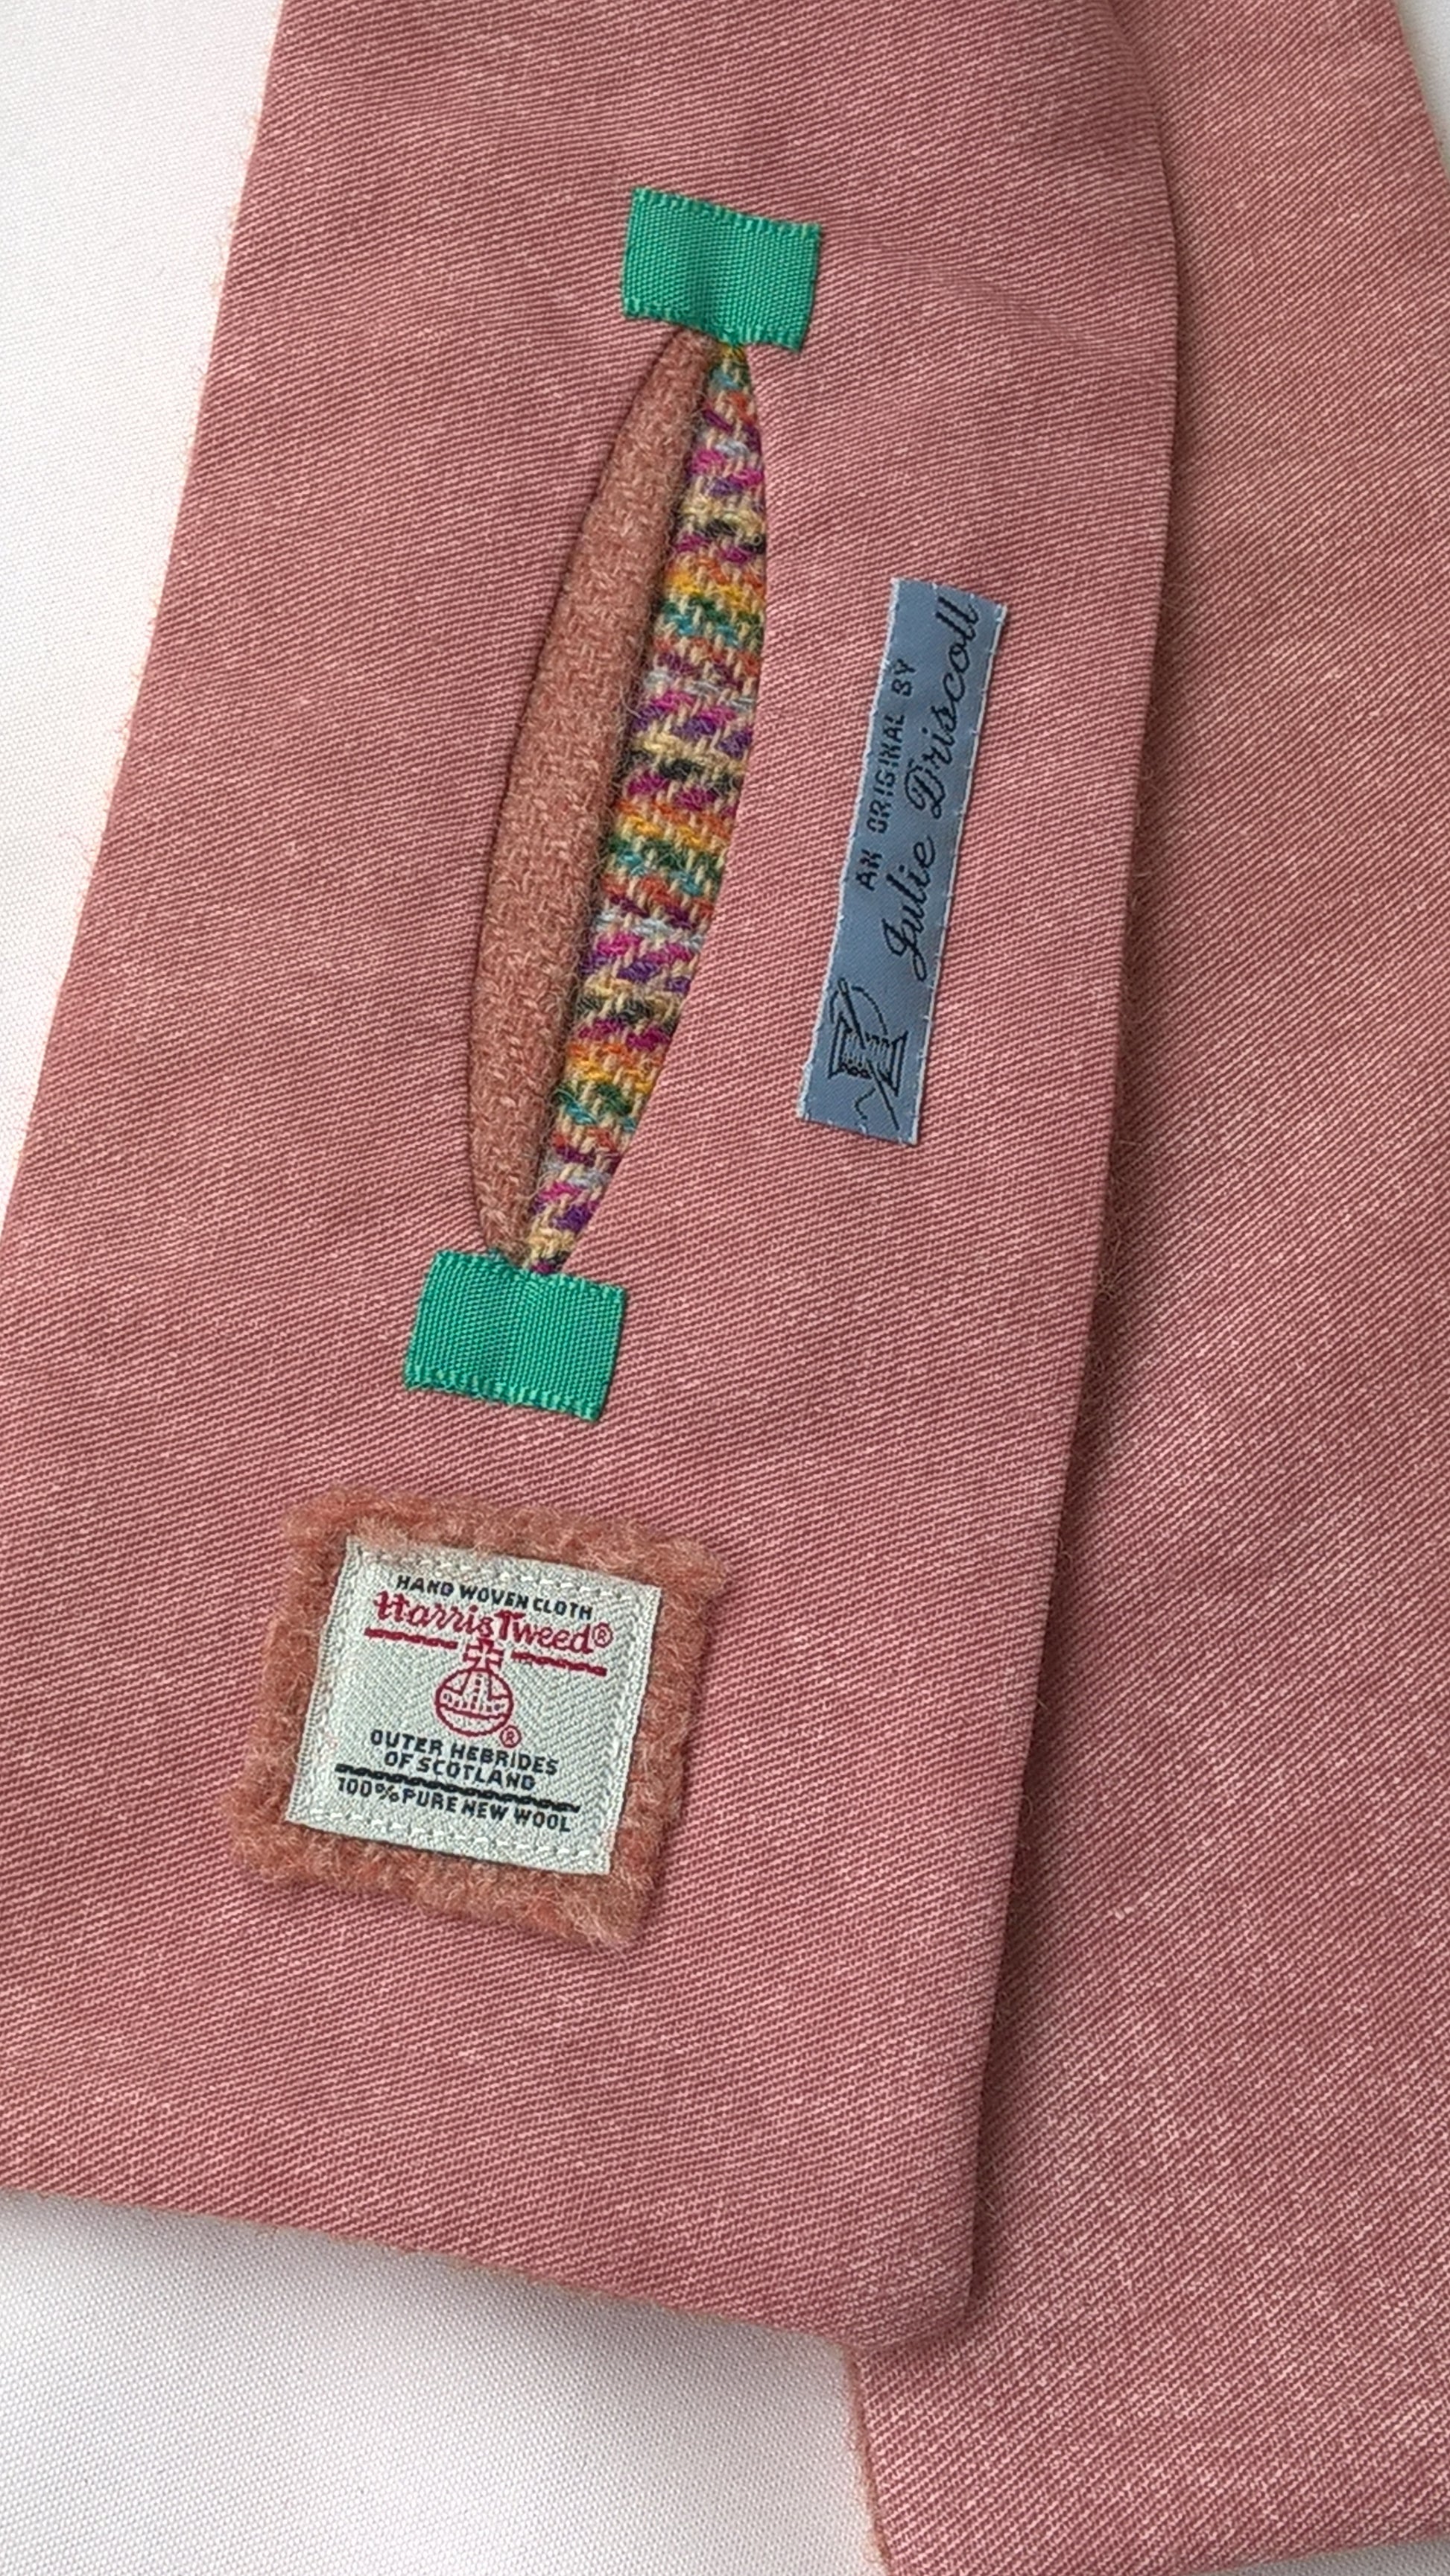 Harris Tweed label on inside of scarf cravat